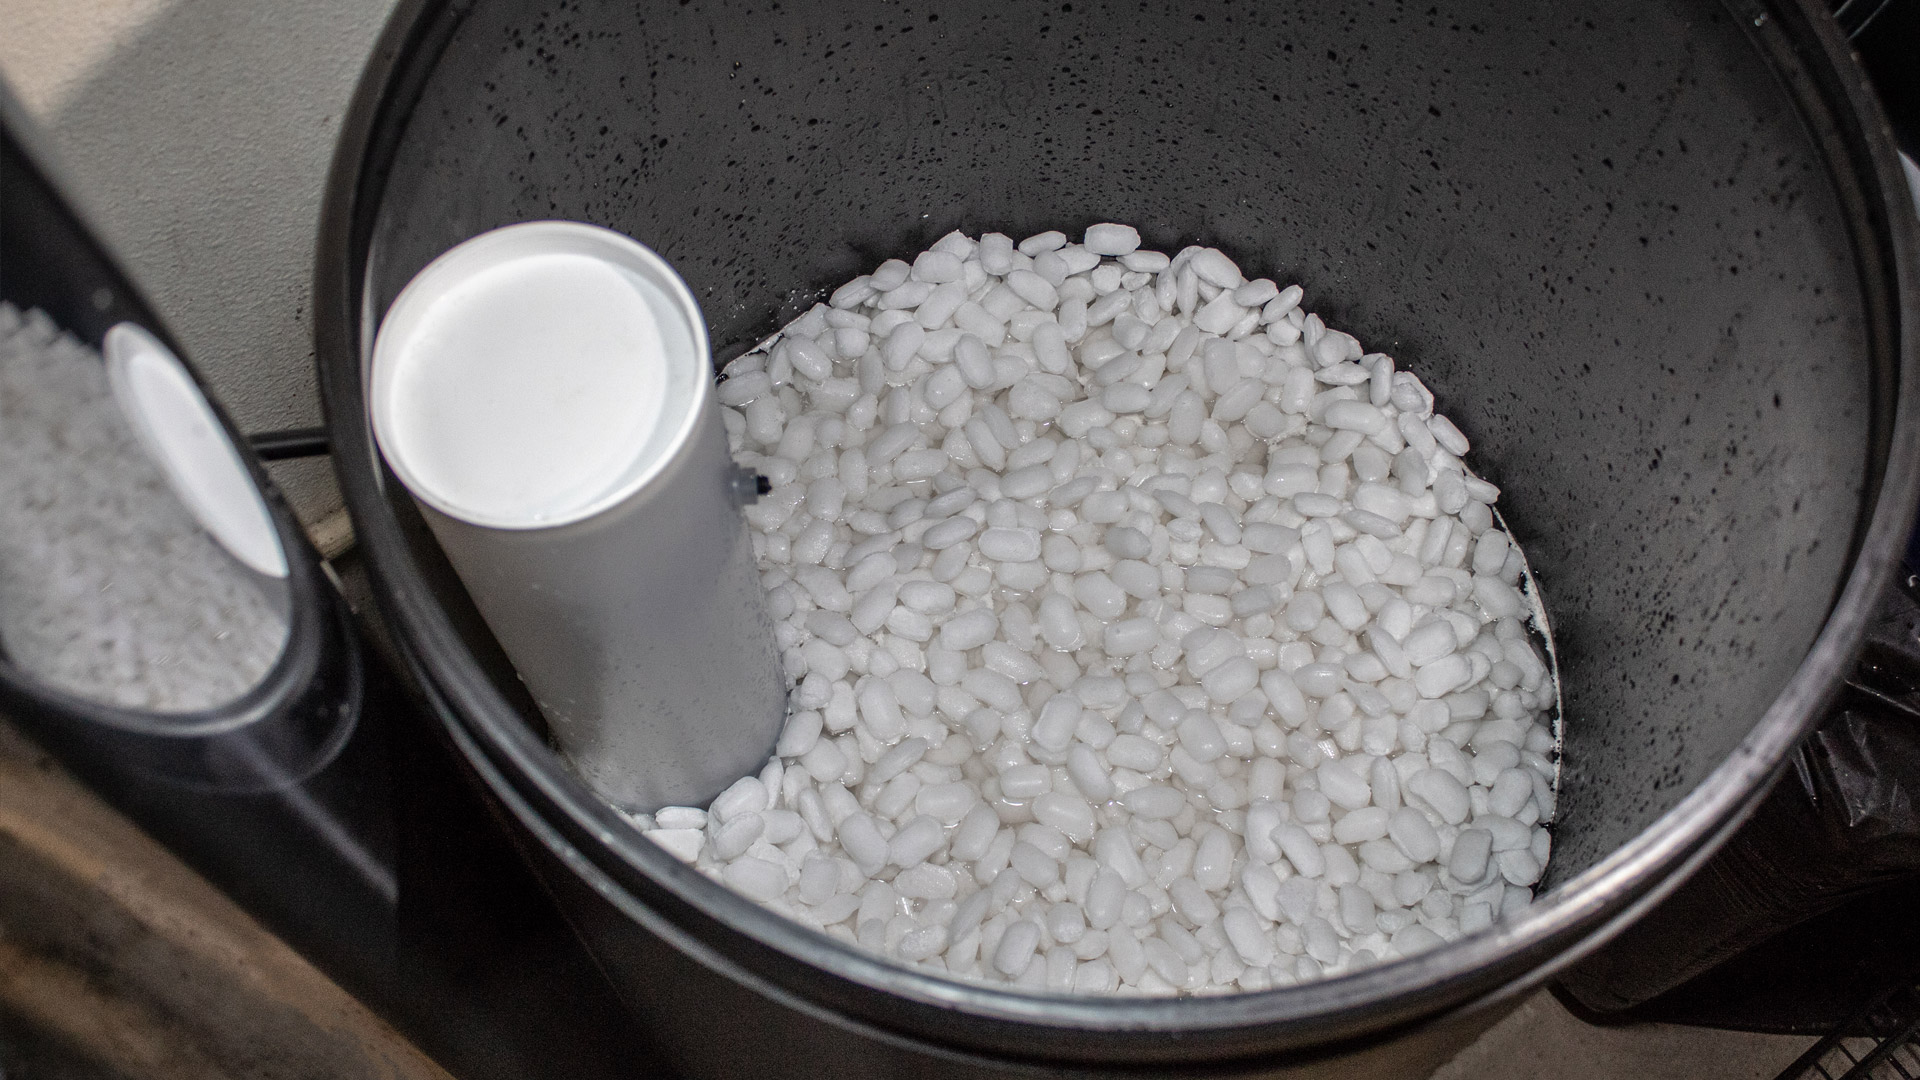 Water softener salt at a home in Lakeland, FL.